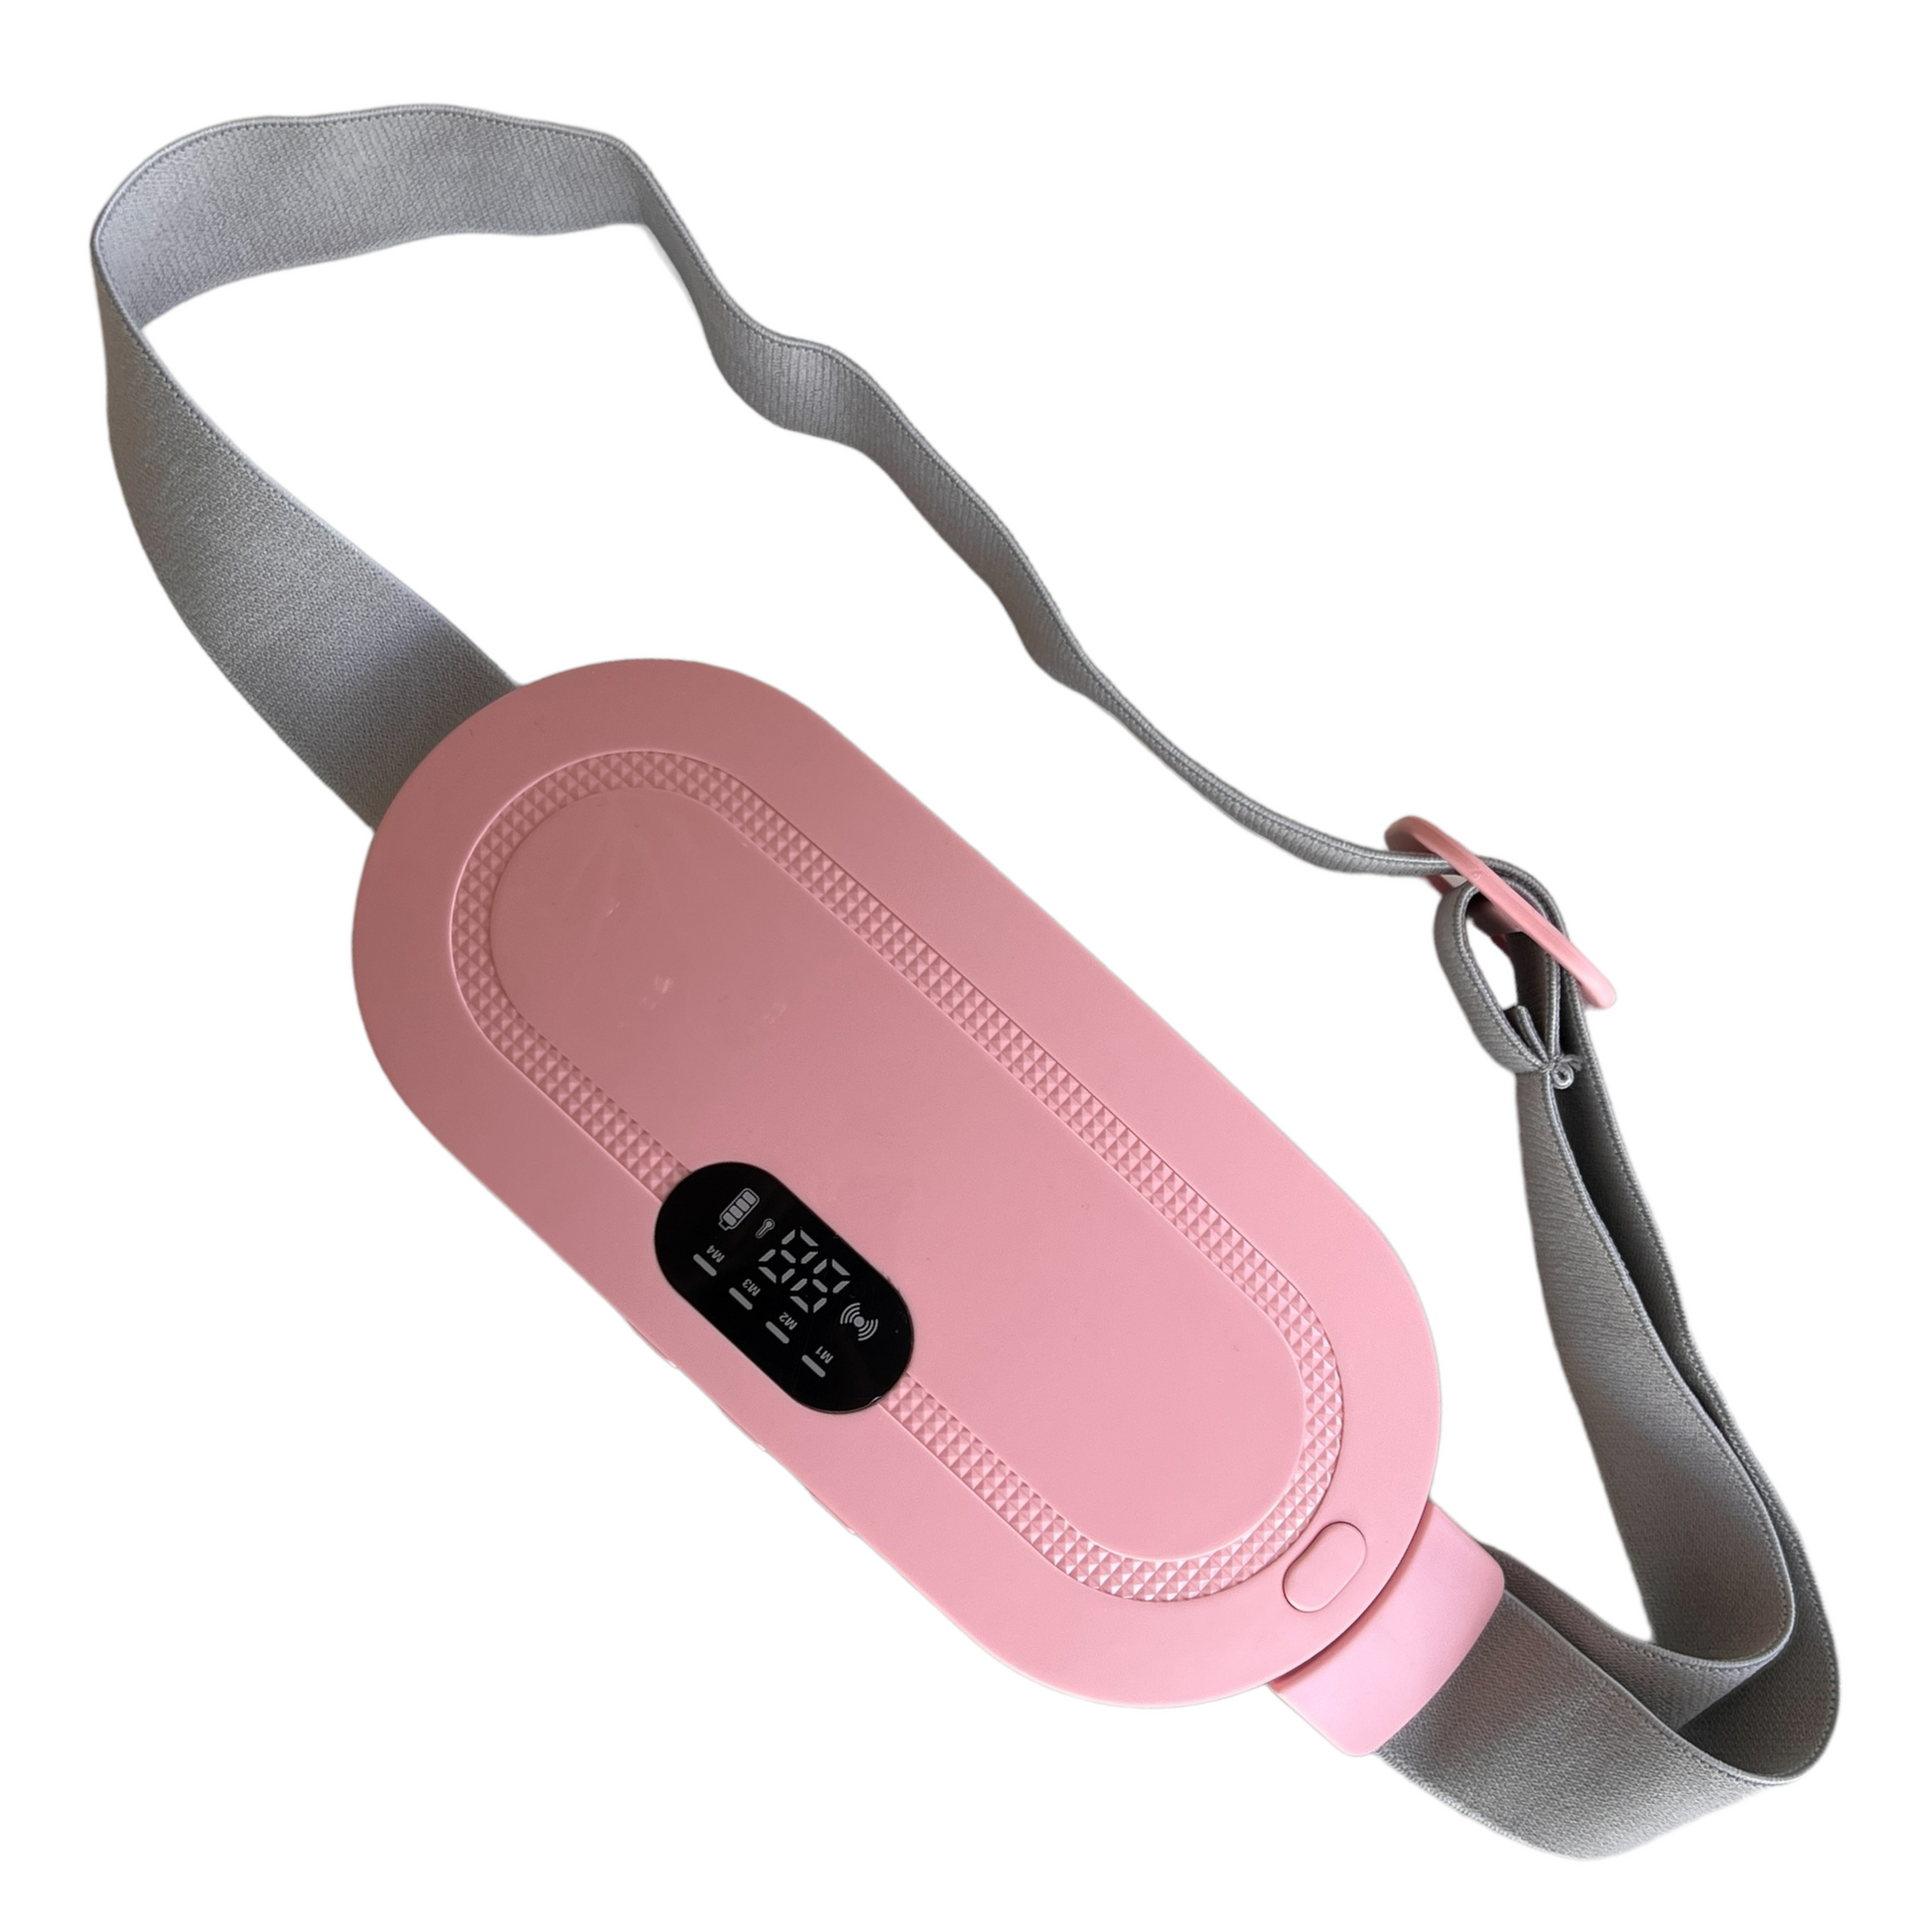 Heating Massage Belt (USB) – Kylee & Co